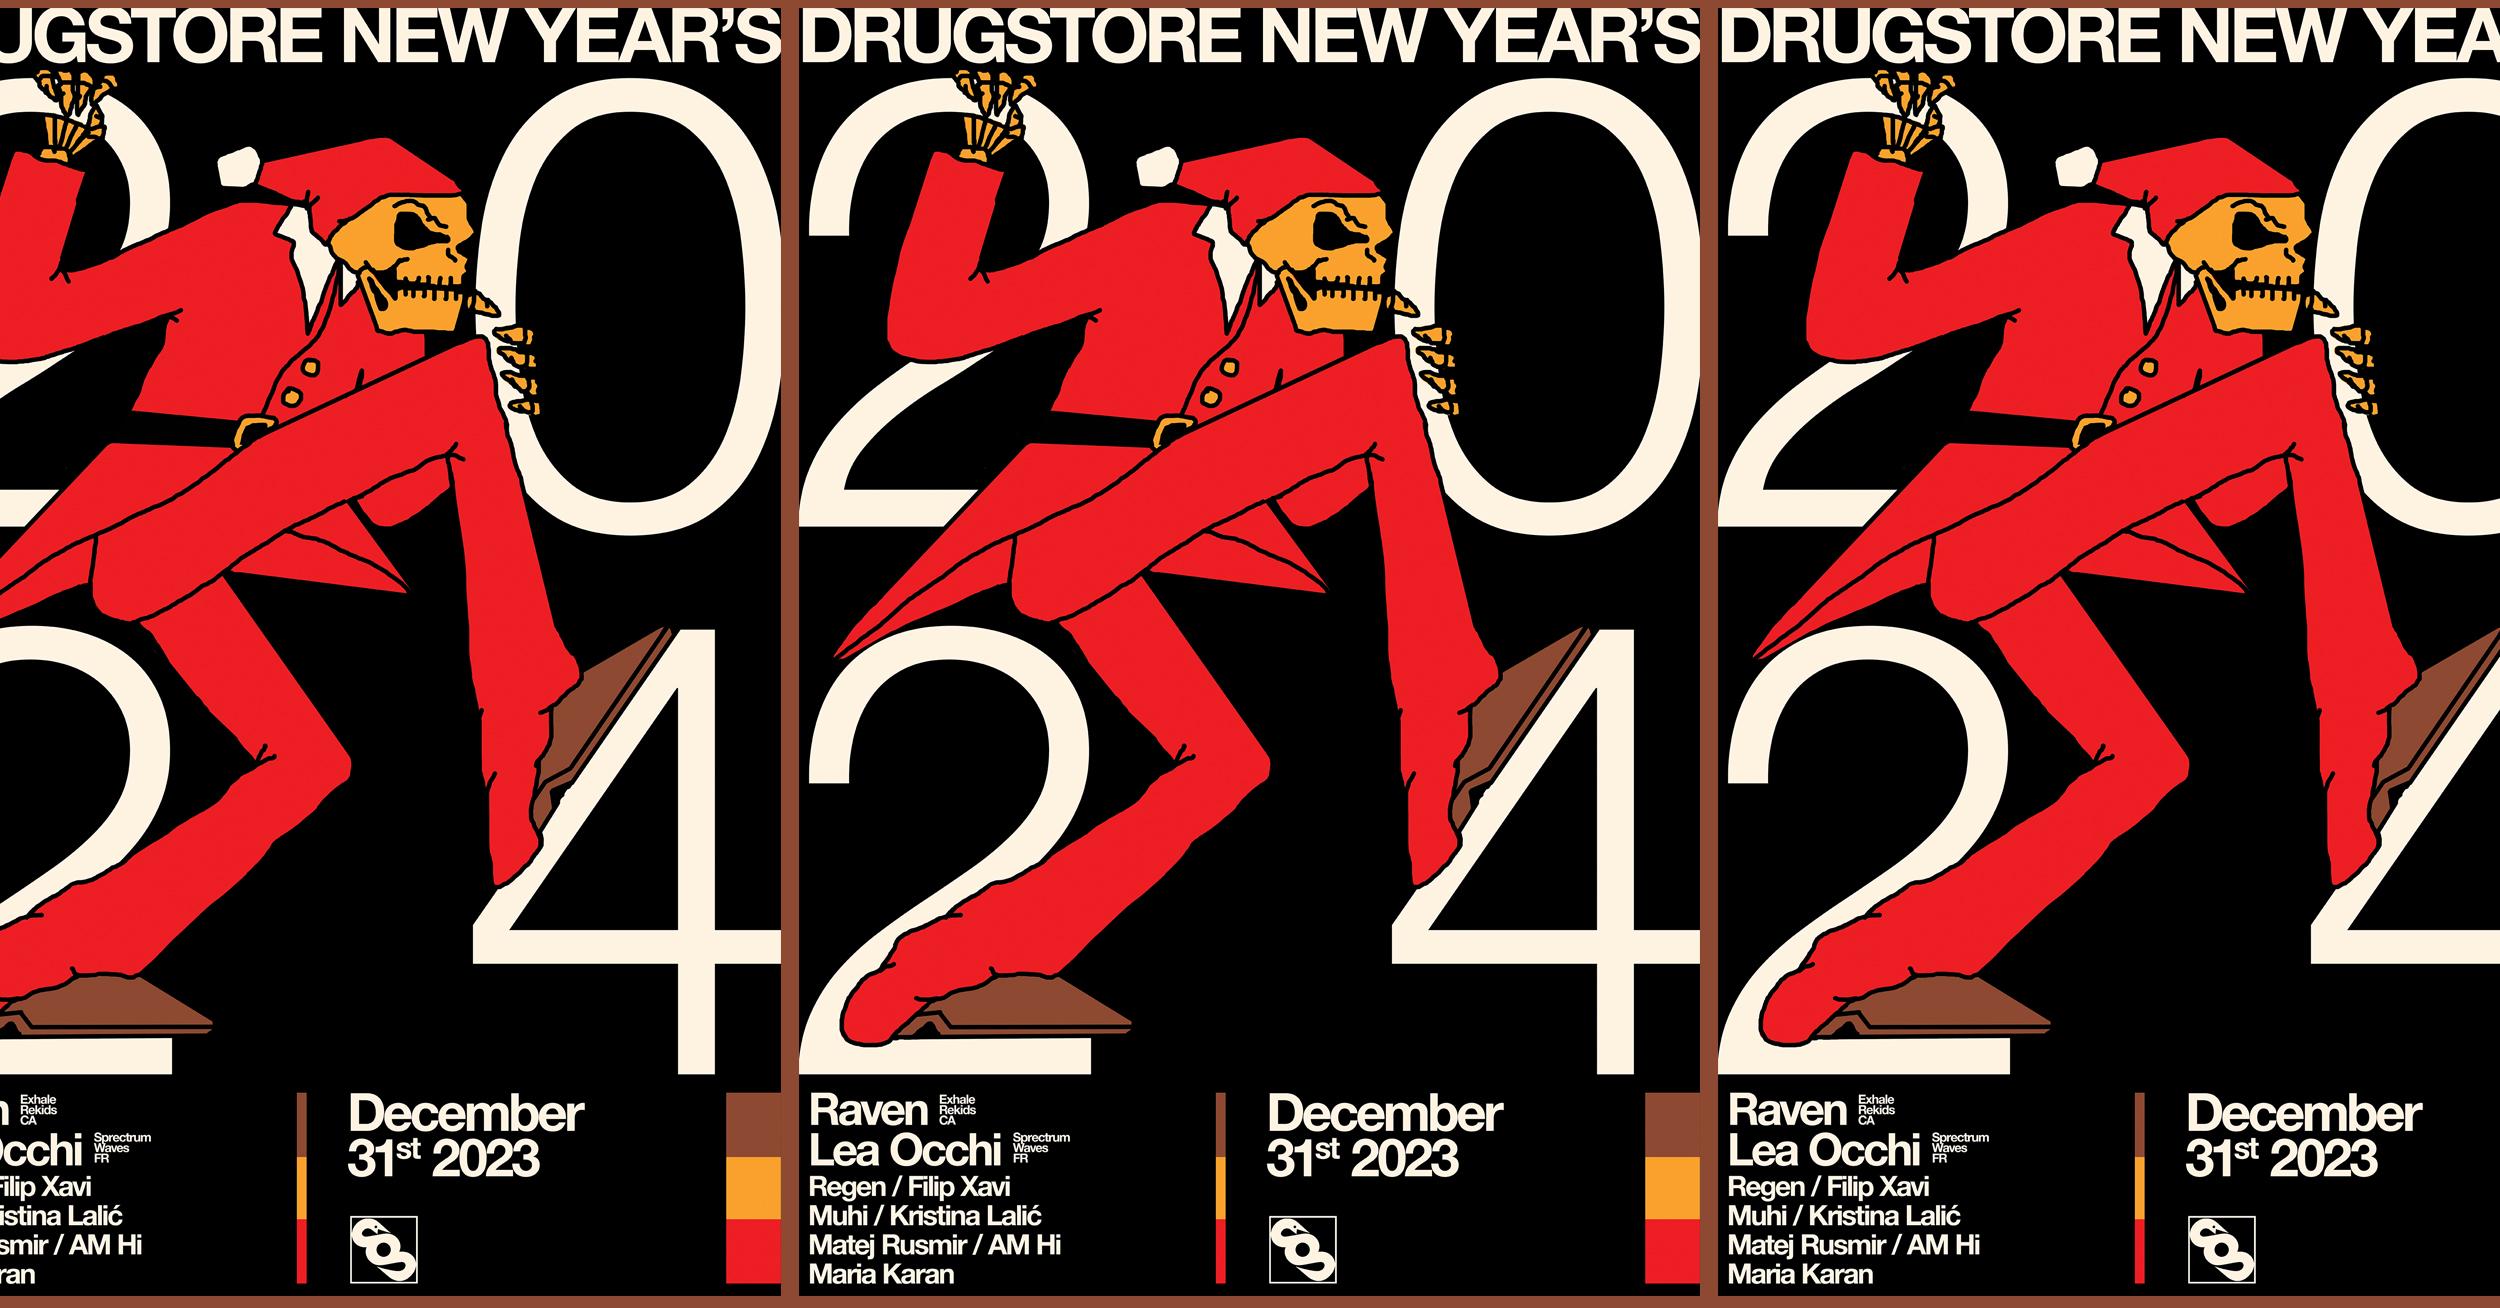 Slika za Drugstore Nova godina u tri kluba